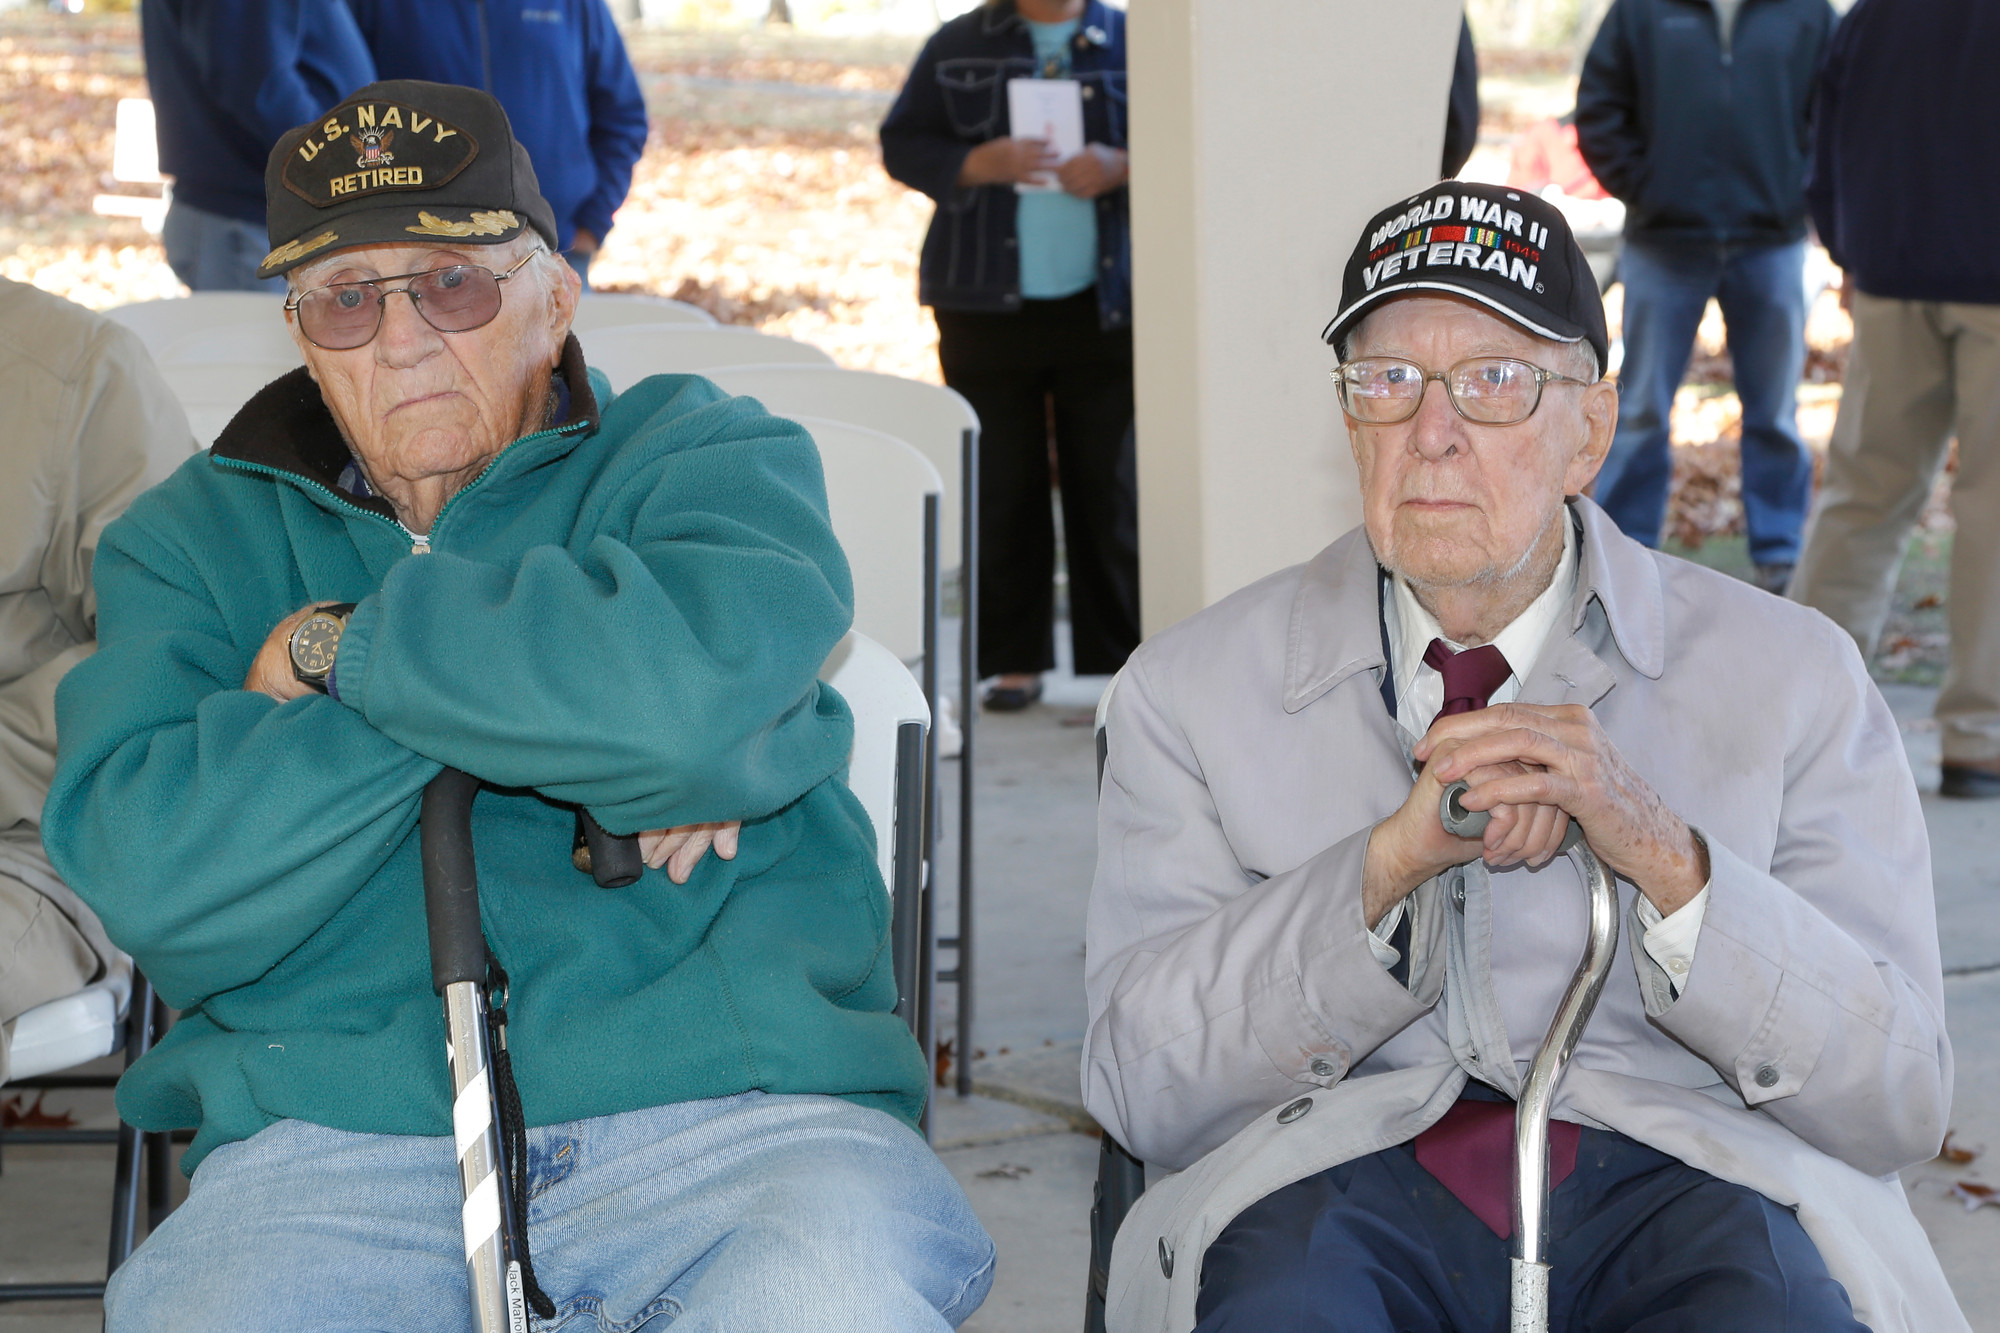 U.S. Navy pilot John Mahoney, left, and U.S. Army veteran Walter Harrod attended Monday afternoon